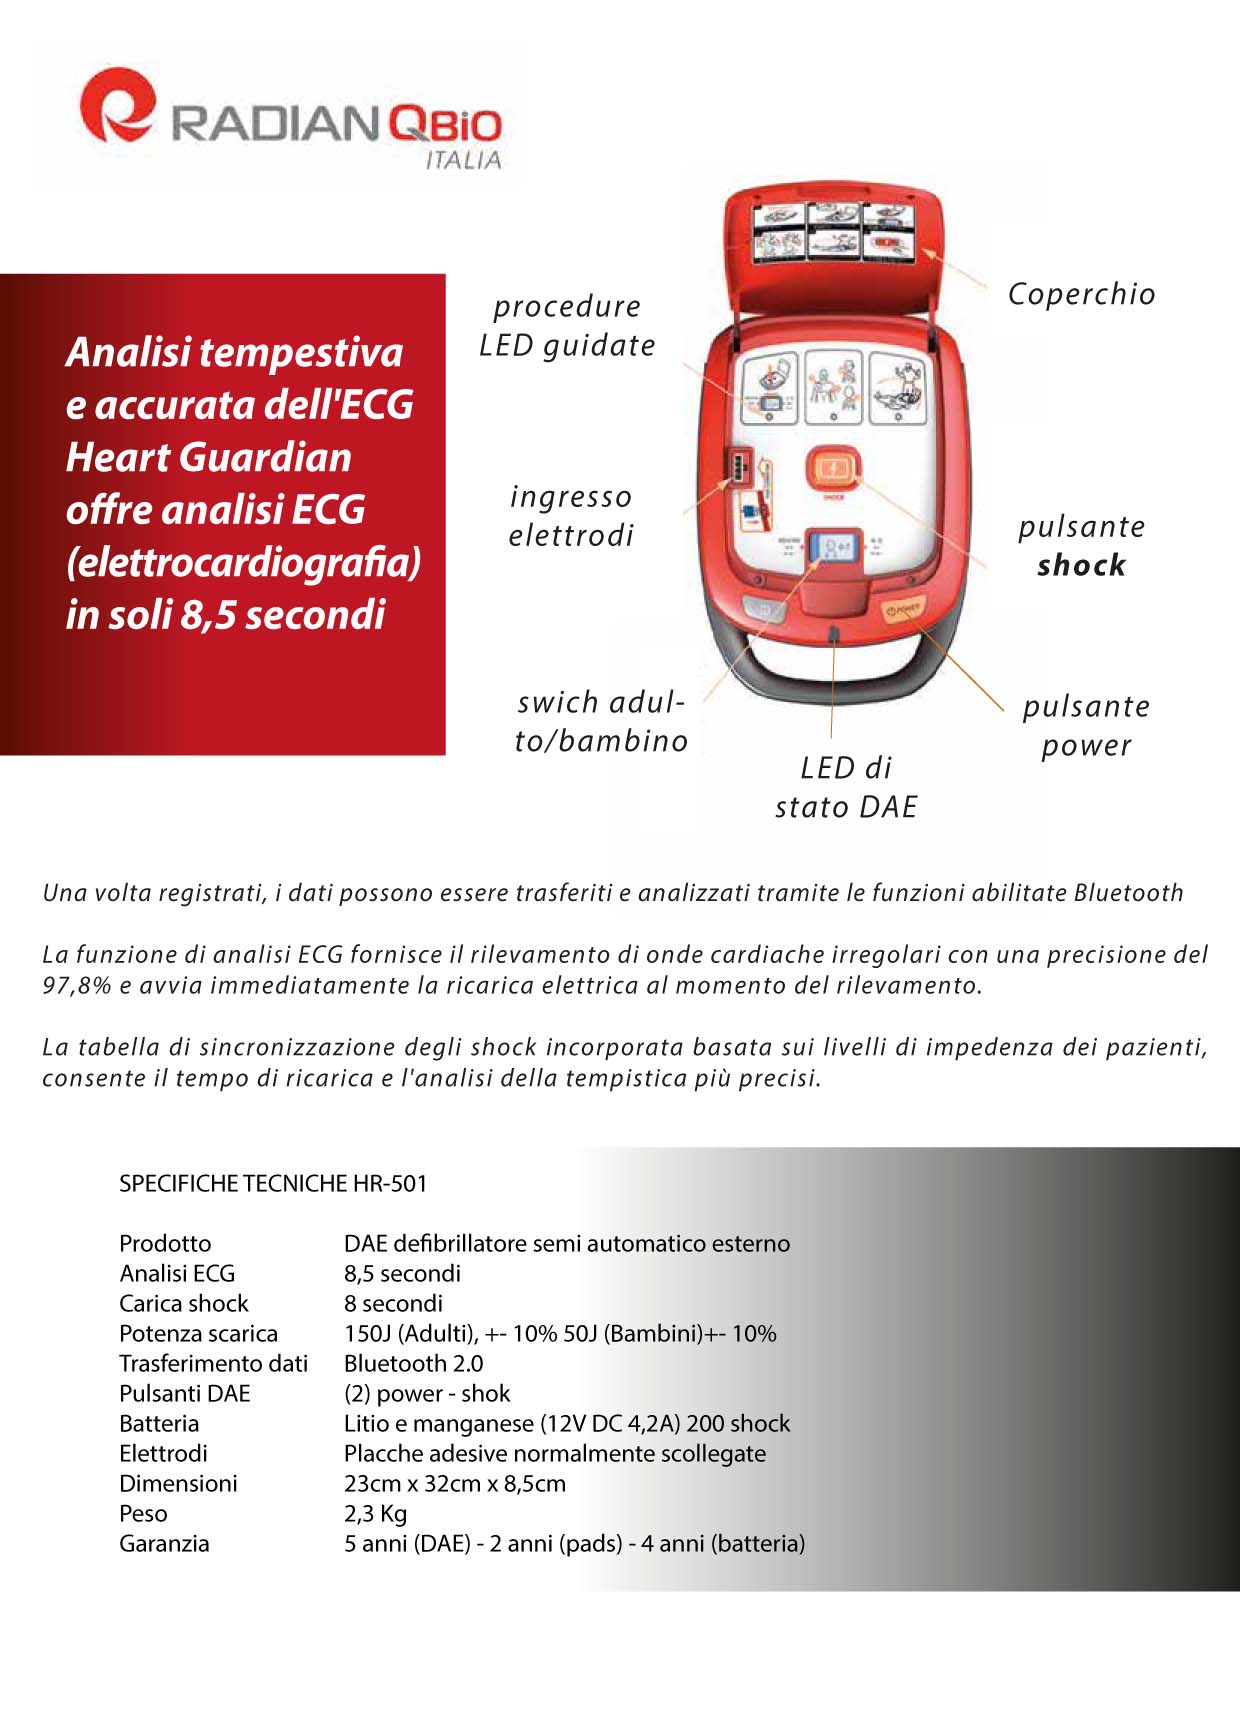 Specifiche tecniche heart guardian hr-501